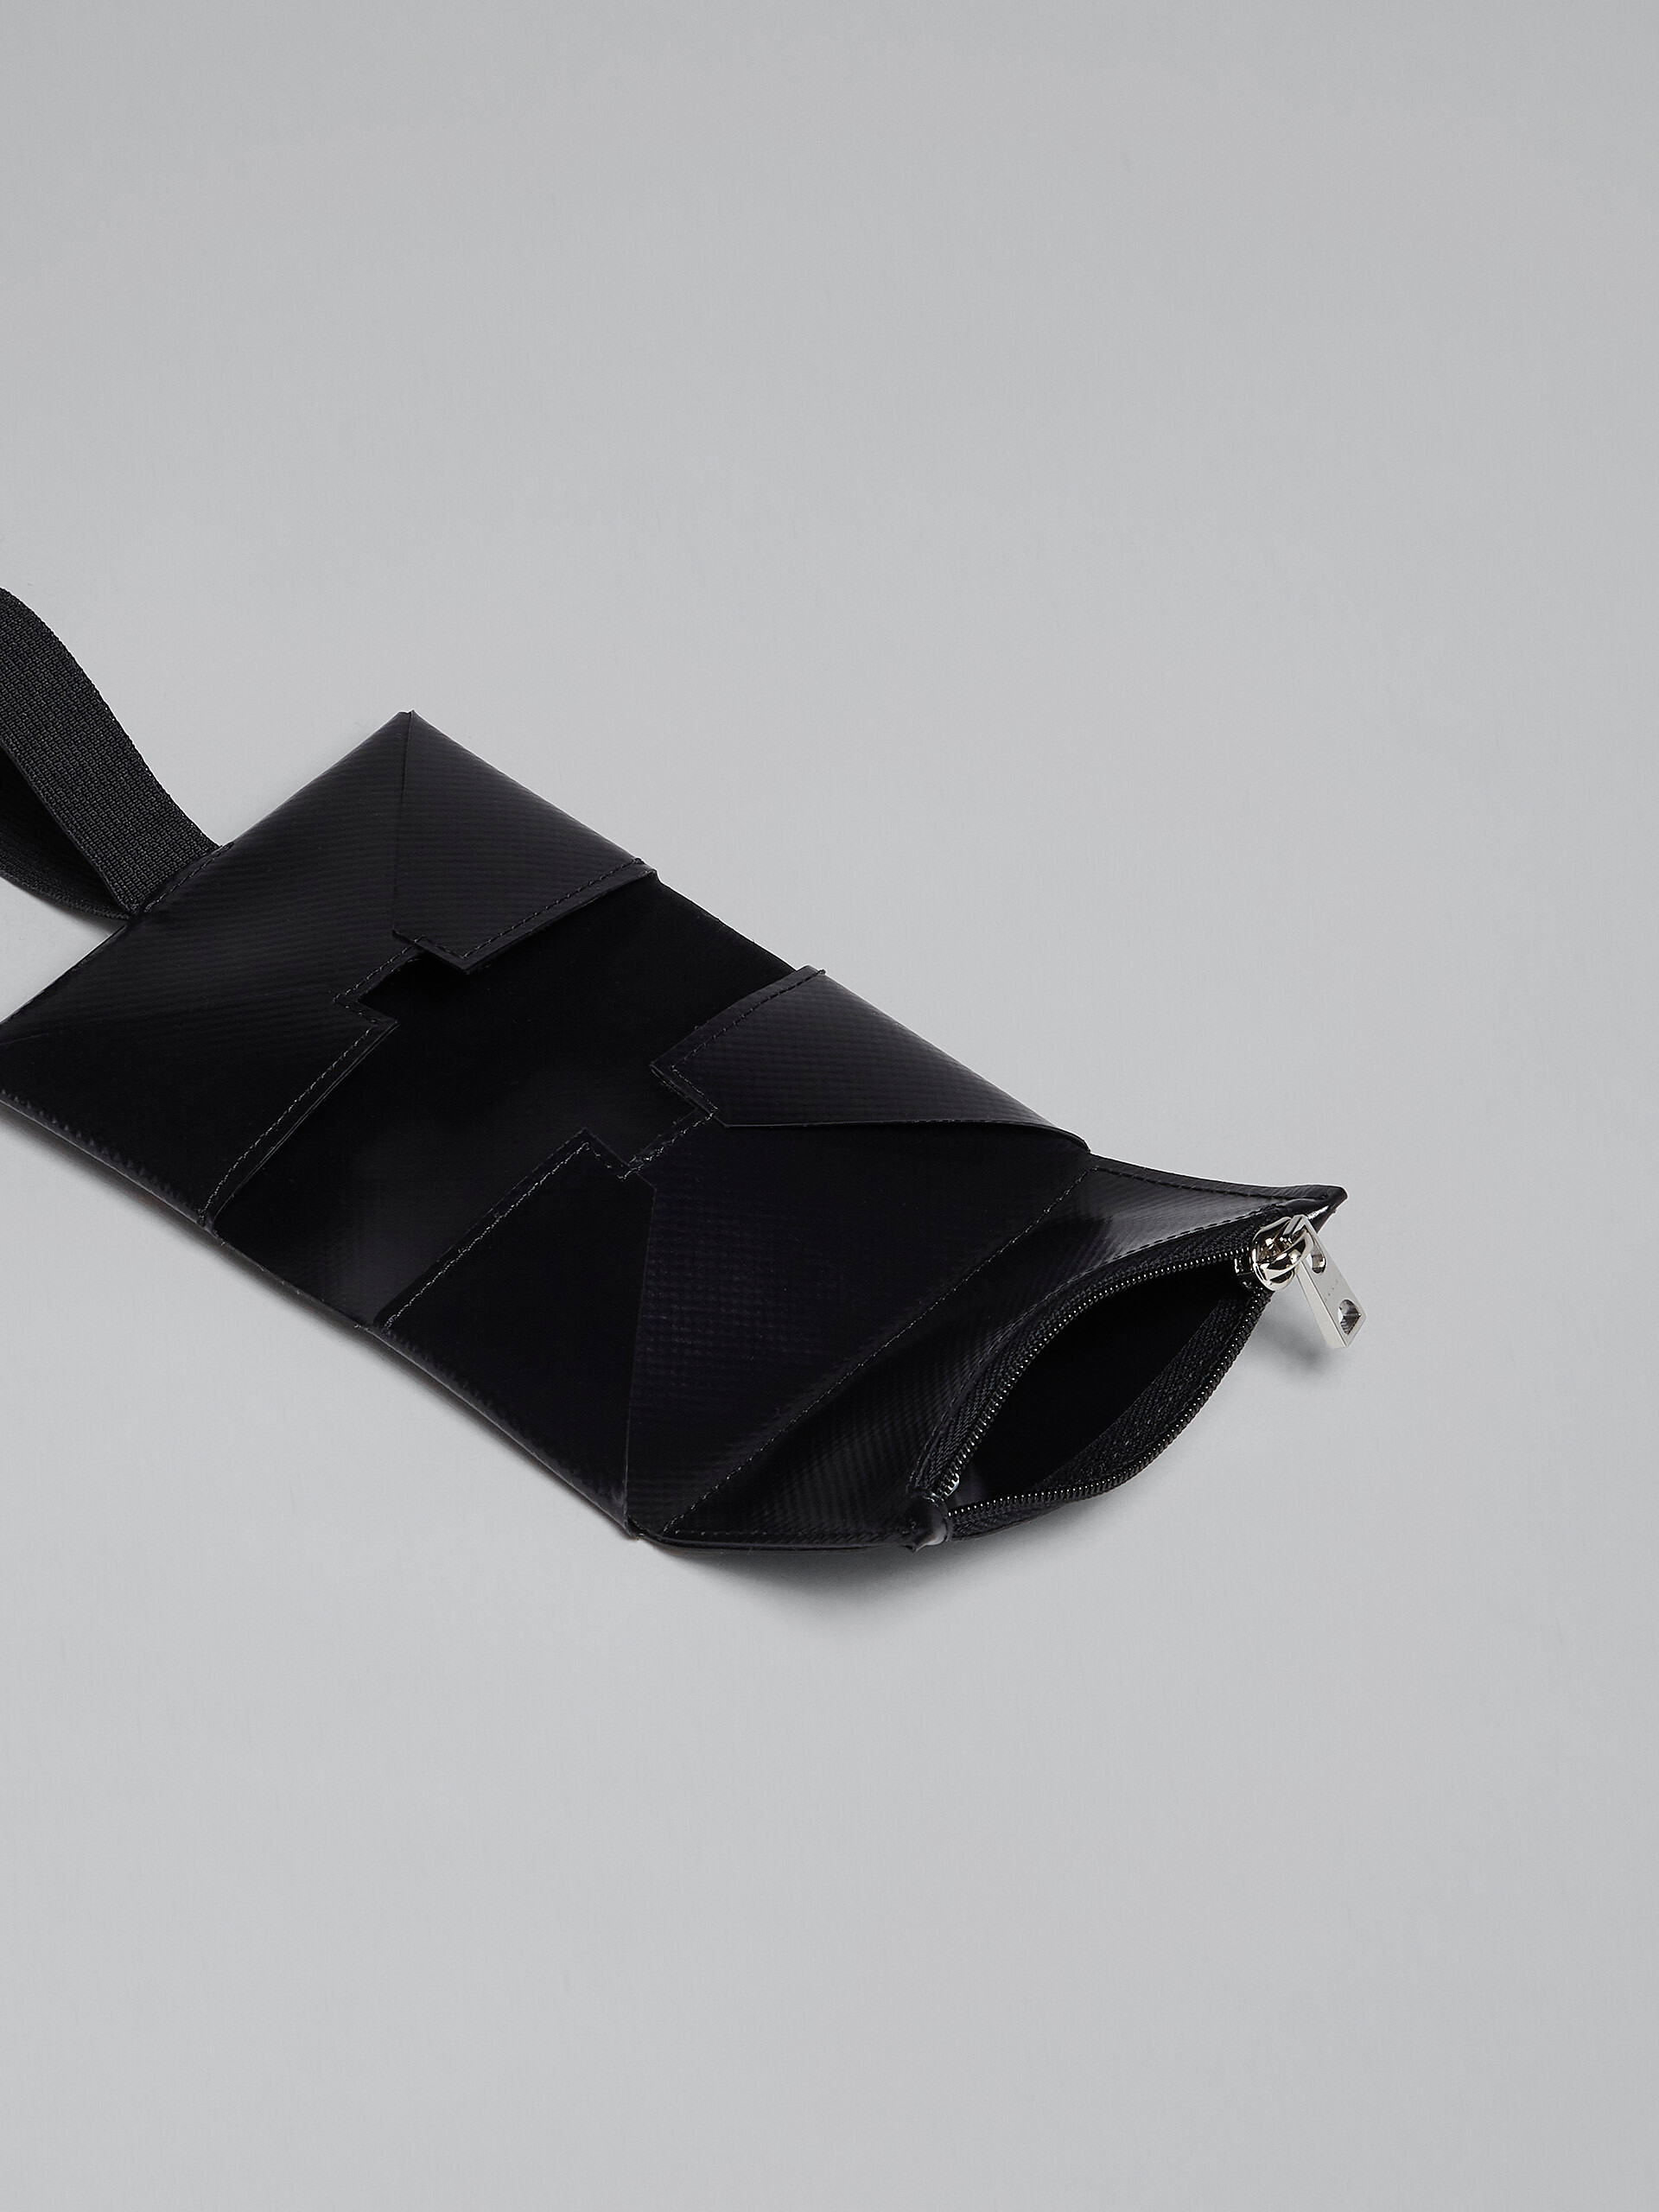 Portafoglio tri-fold nero - Portafogli - Image 2